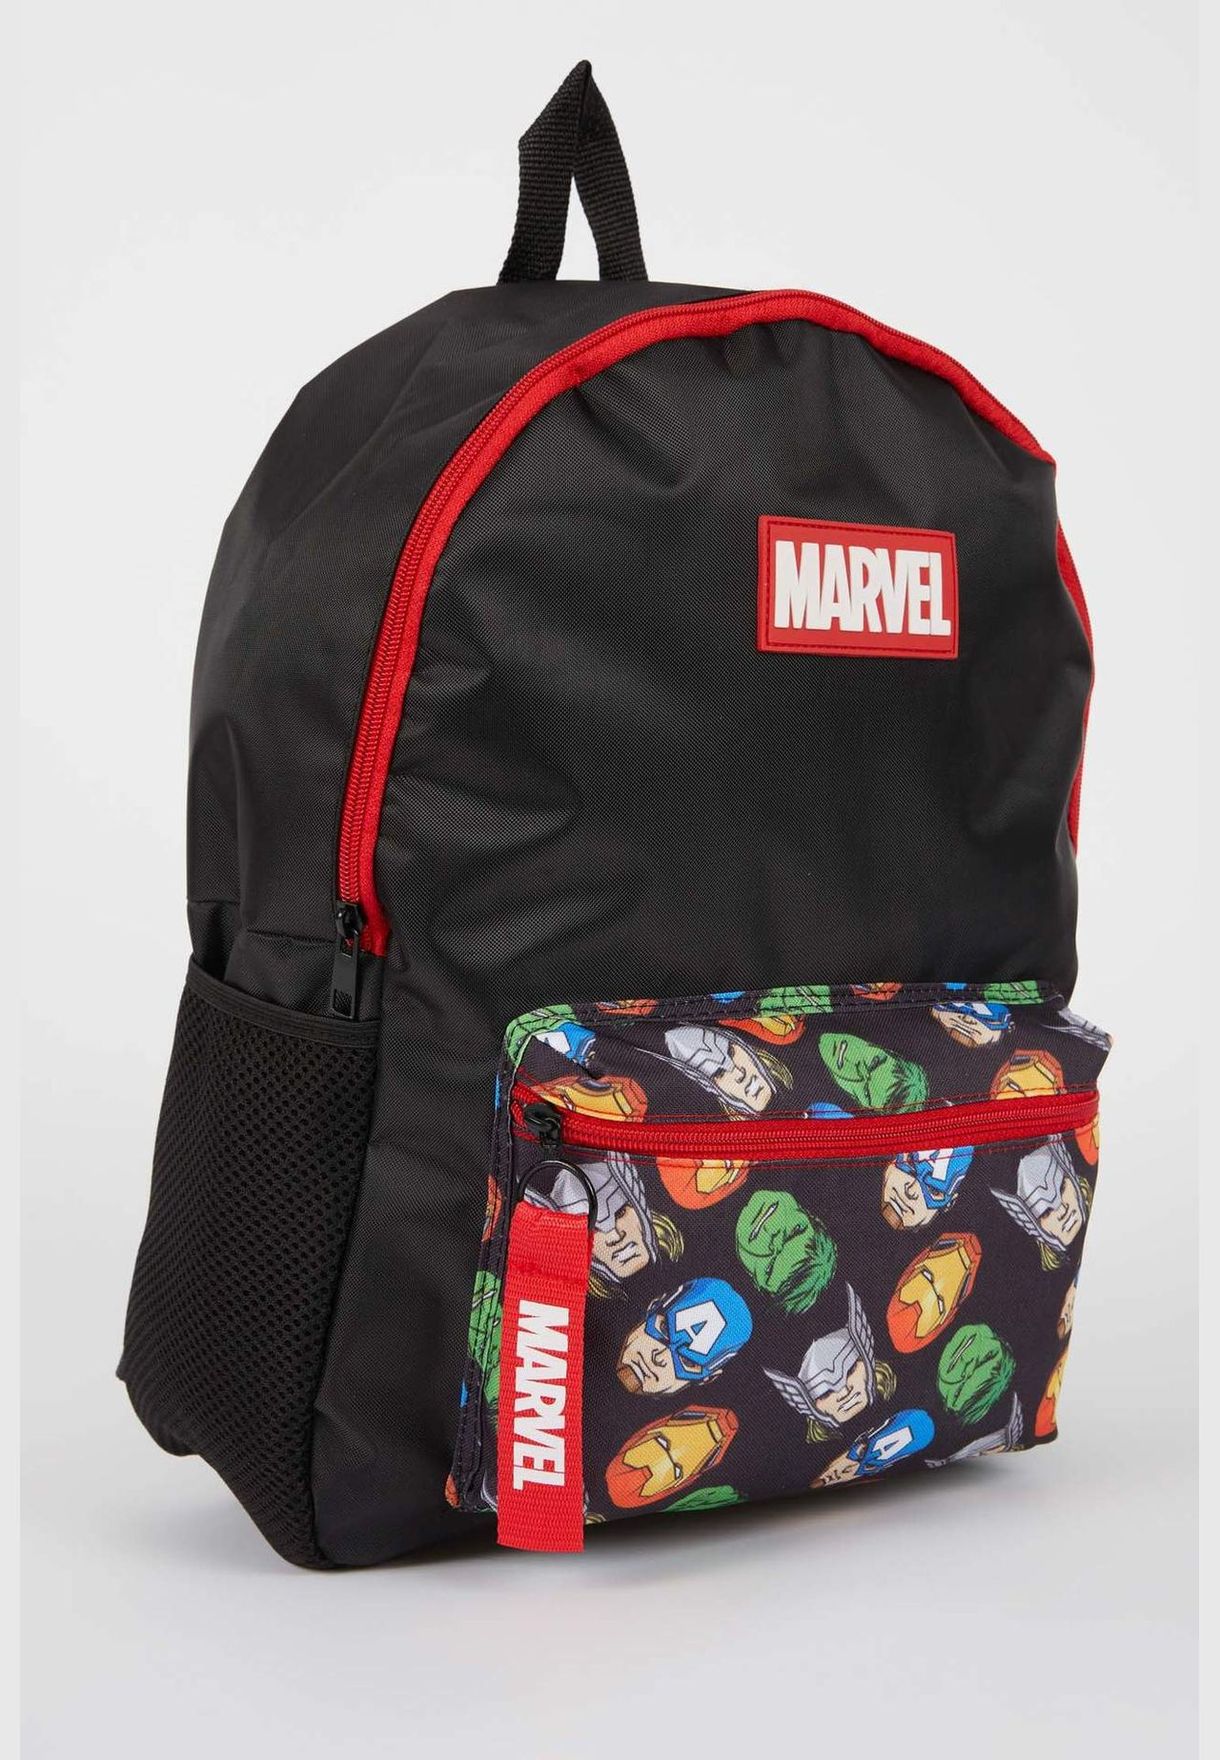 Boy Avengers Licenced Bag